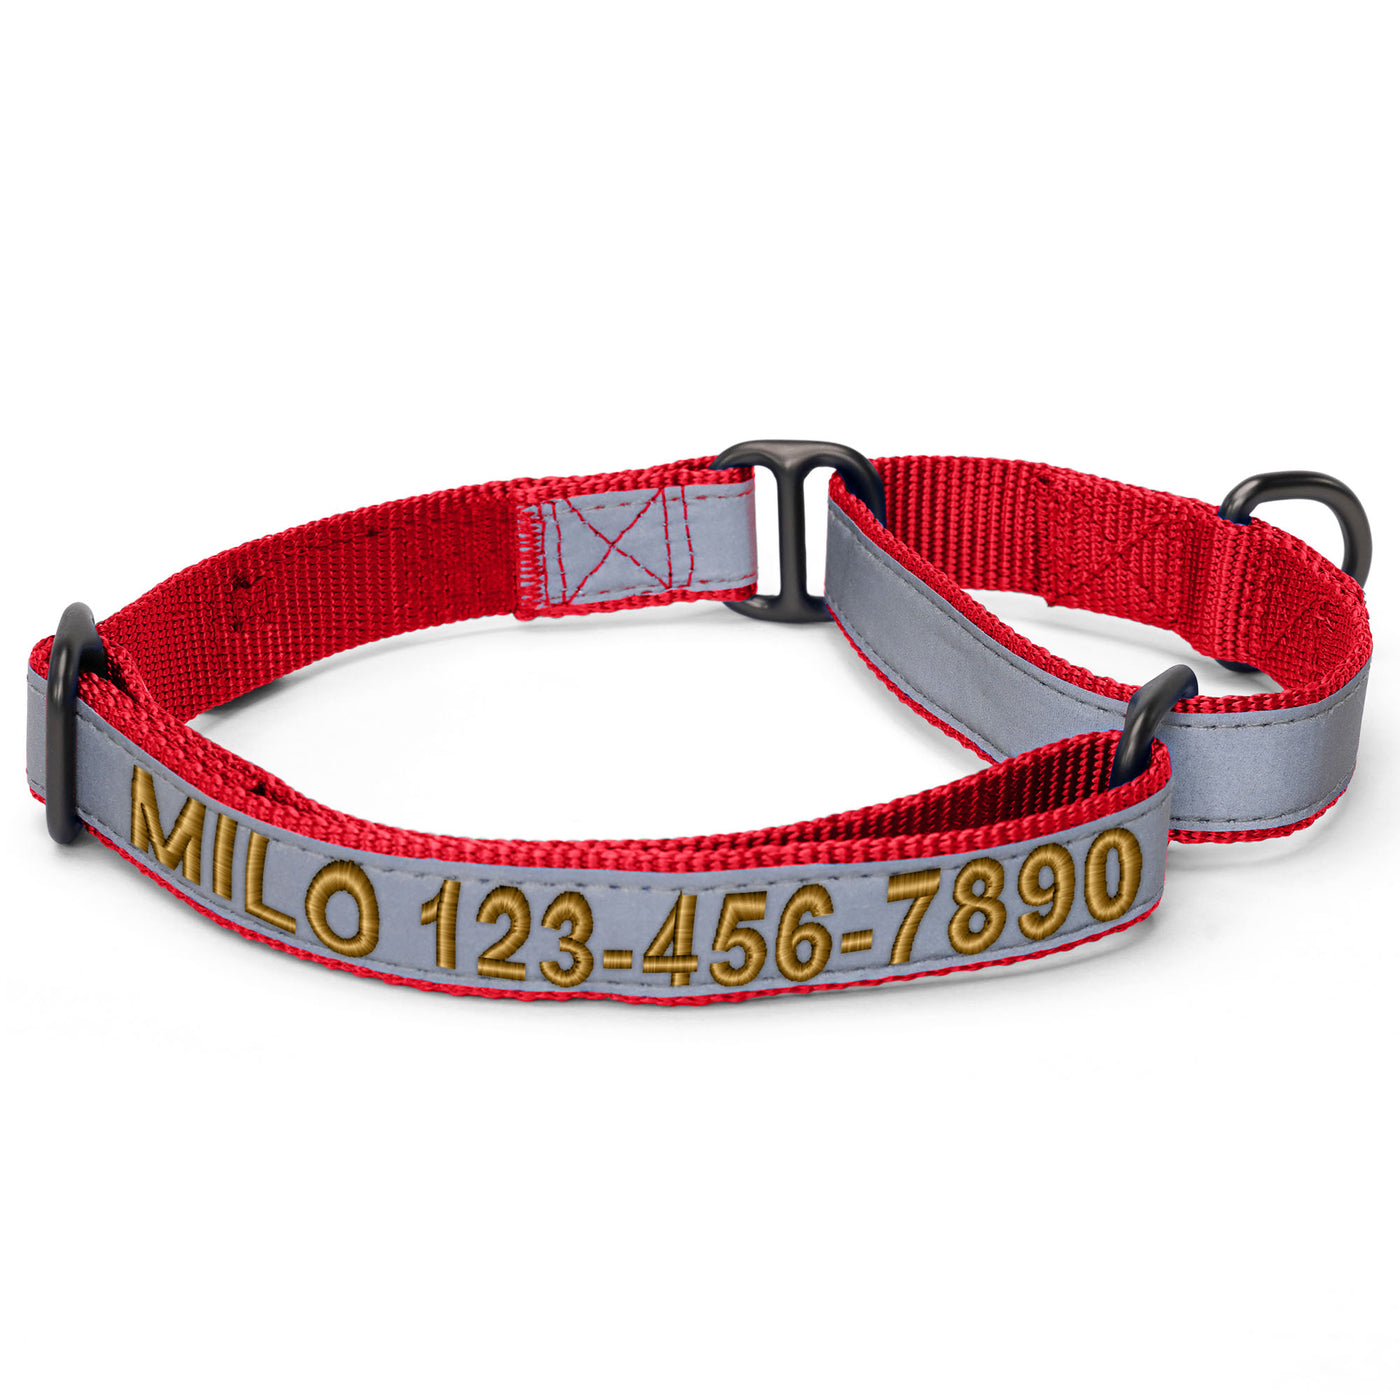 Personalized Reflective Martingale Dog Collar